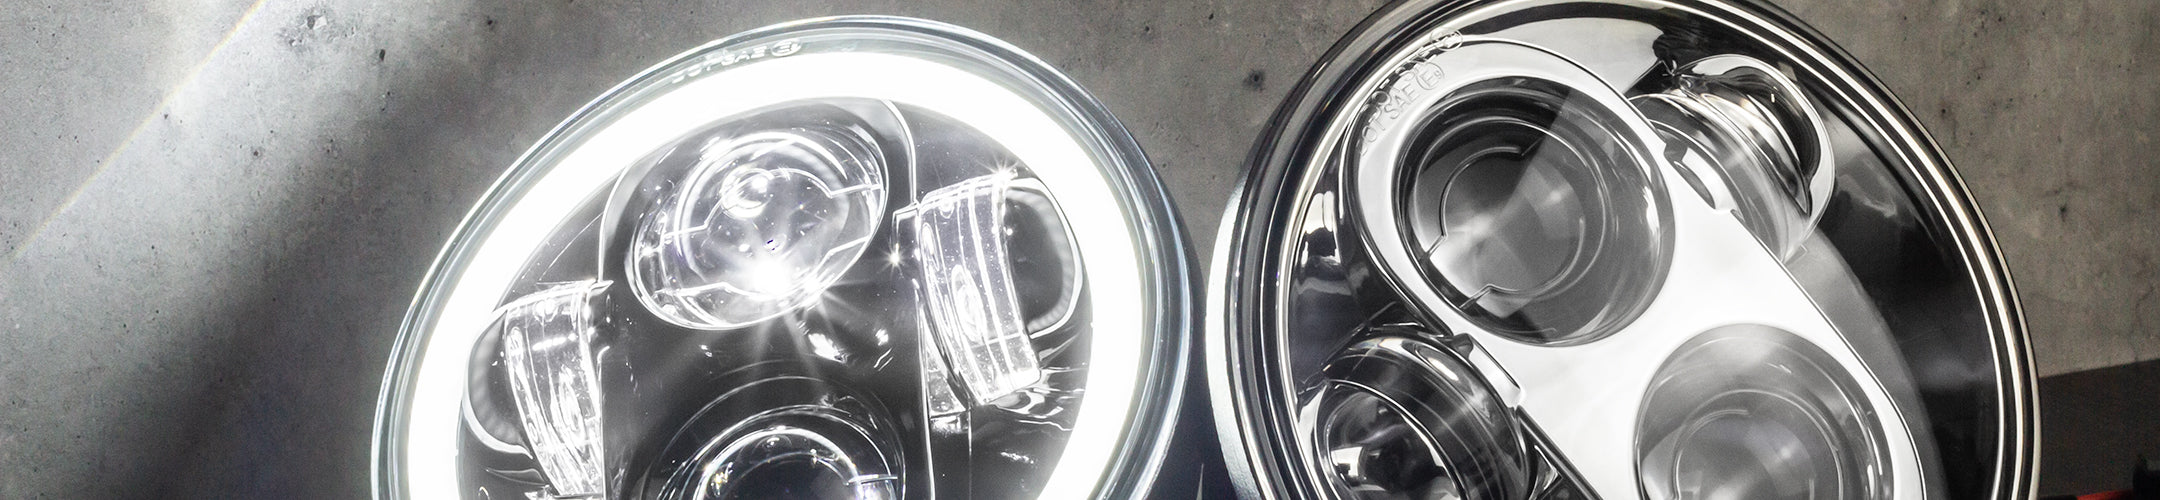 Generation II 5 ¾ LED Motorcycle Headlight